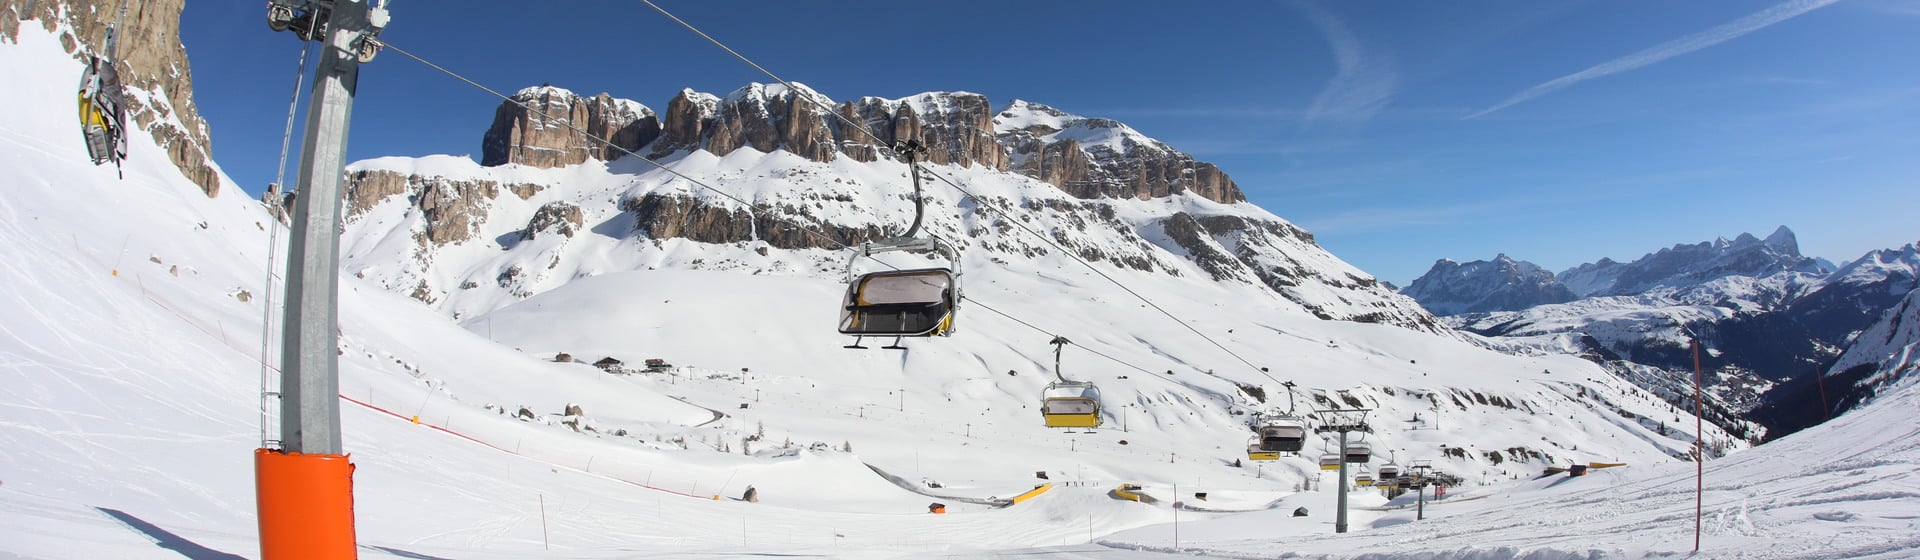 Novità Inverno 2018/2019 Ski Area Arabba - Marmolada